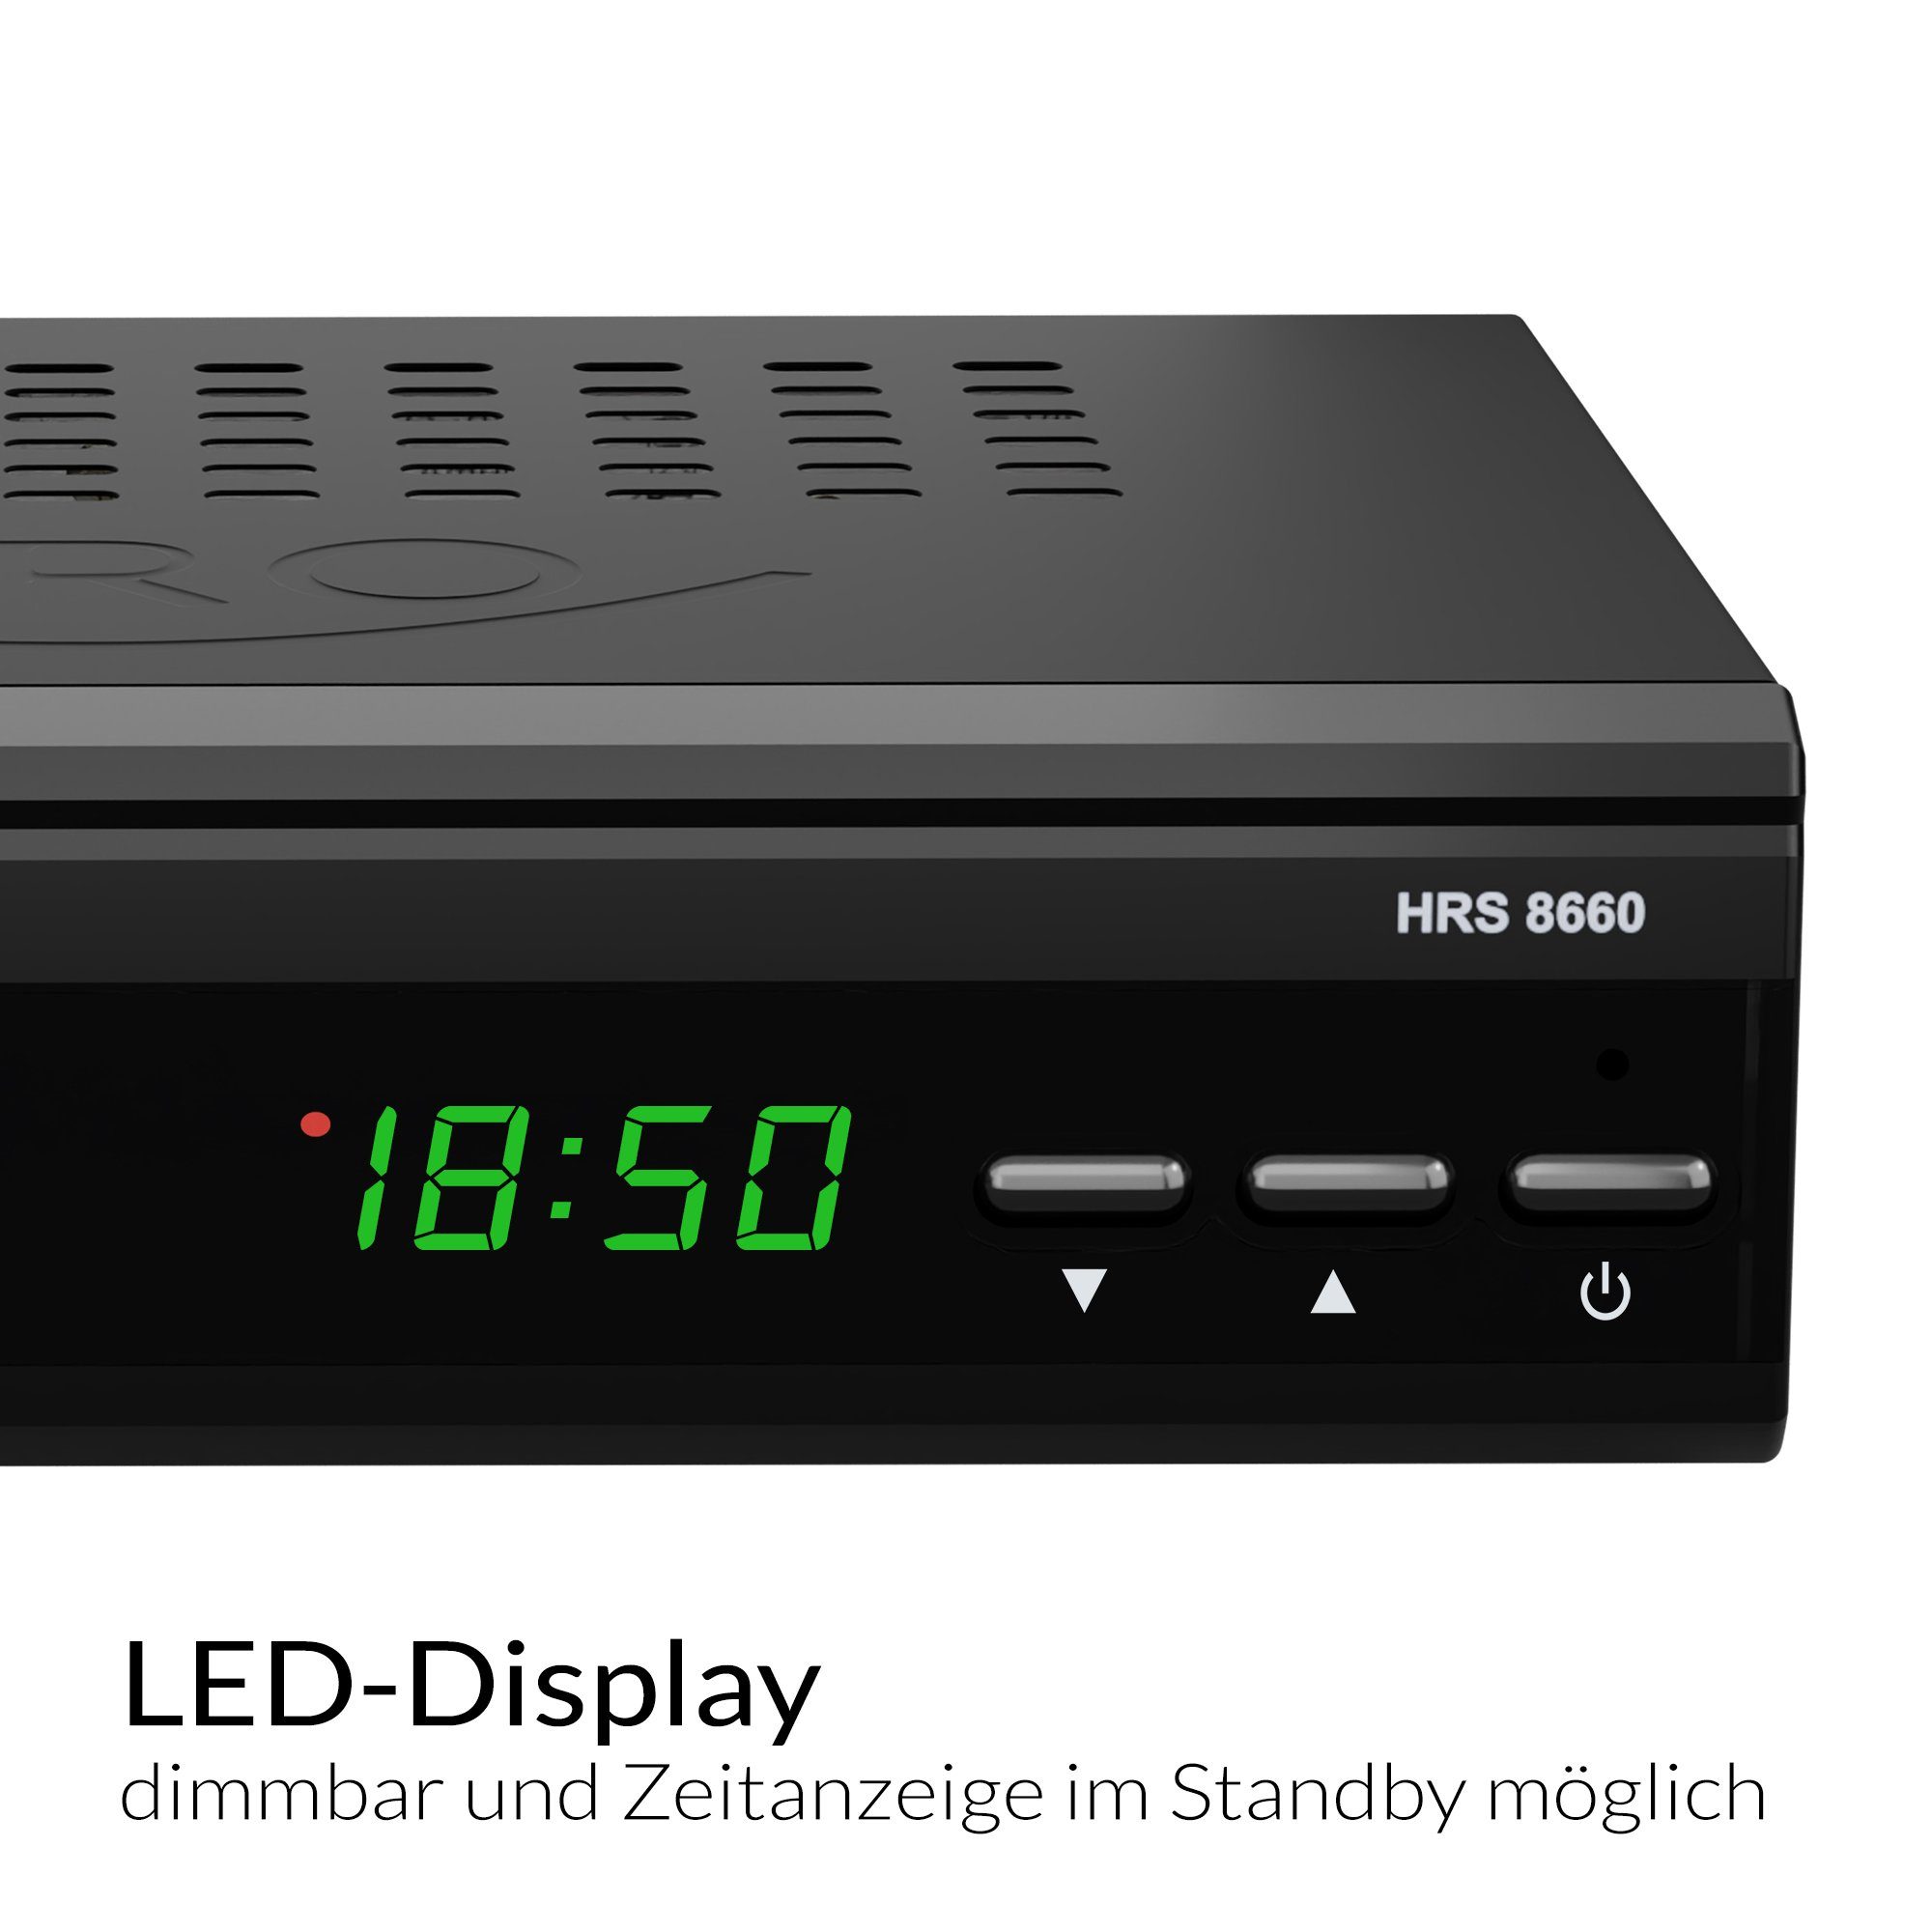 8660 PVR-Ready, HRS Timeshift, LED-Display, Xoro einfache SAT-Receiver HD Installation,